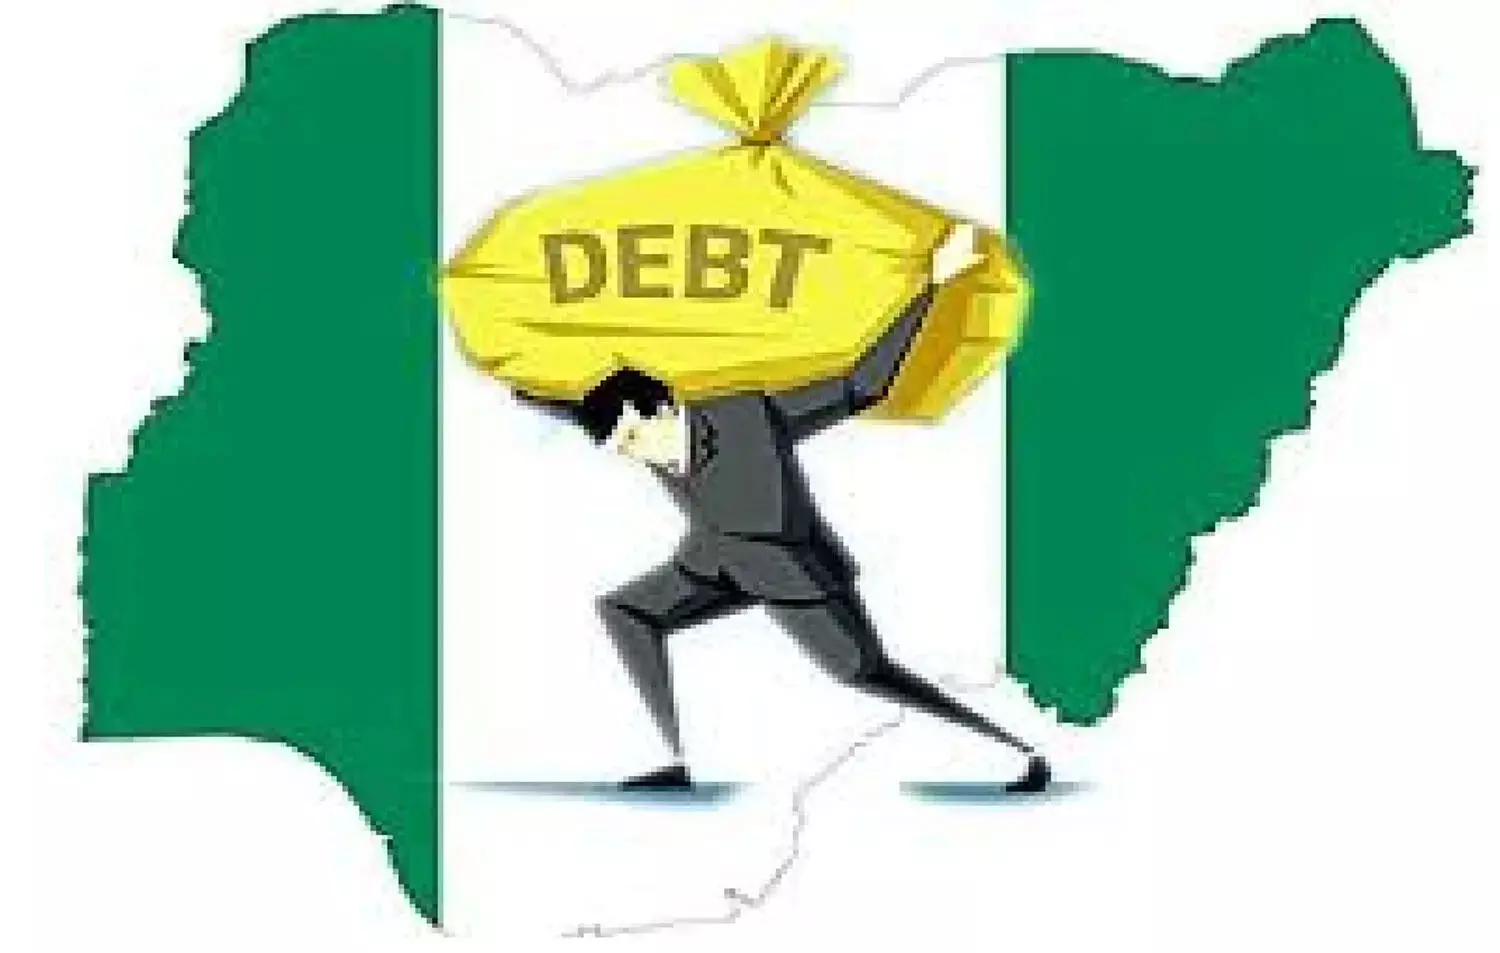 Nigeria’s total public debt stock hits N46.25trn in Q4 2022, NBS reveals